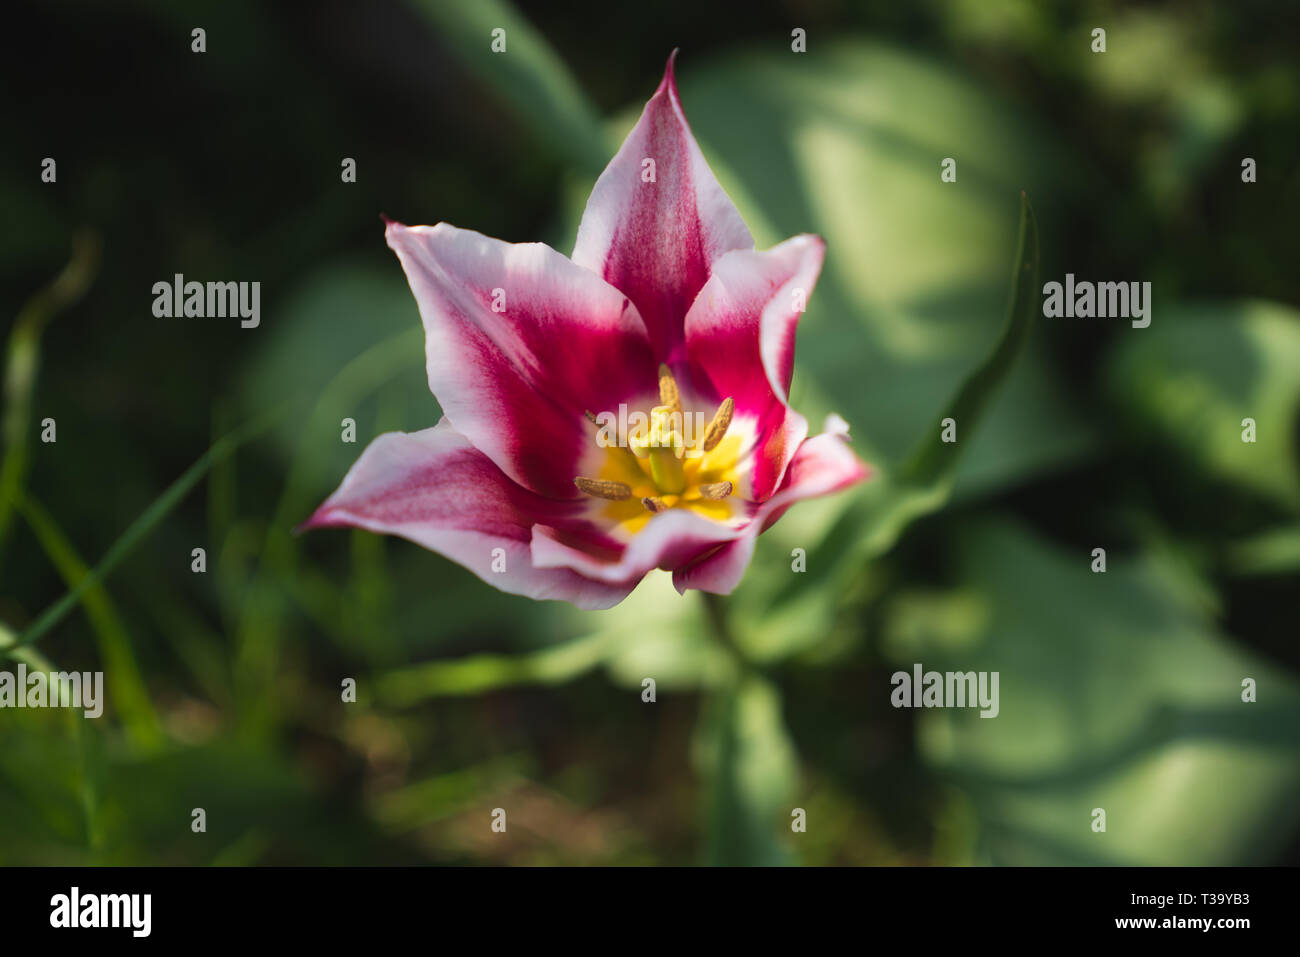 Half Open Magenta Tulip with White Ridge (Tulipa Gavota or Triumph Tulip) with green background Stock Photo